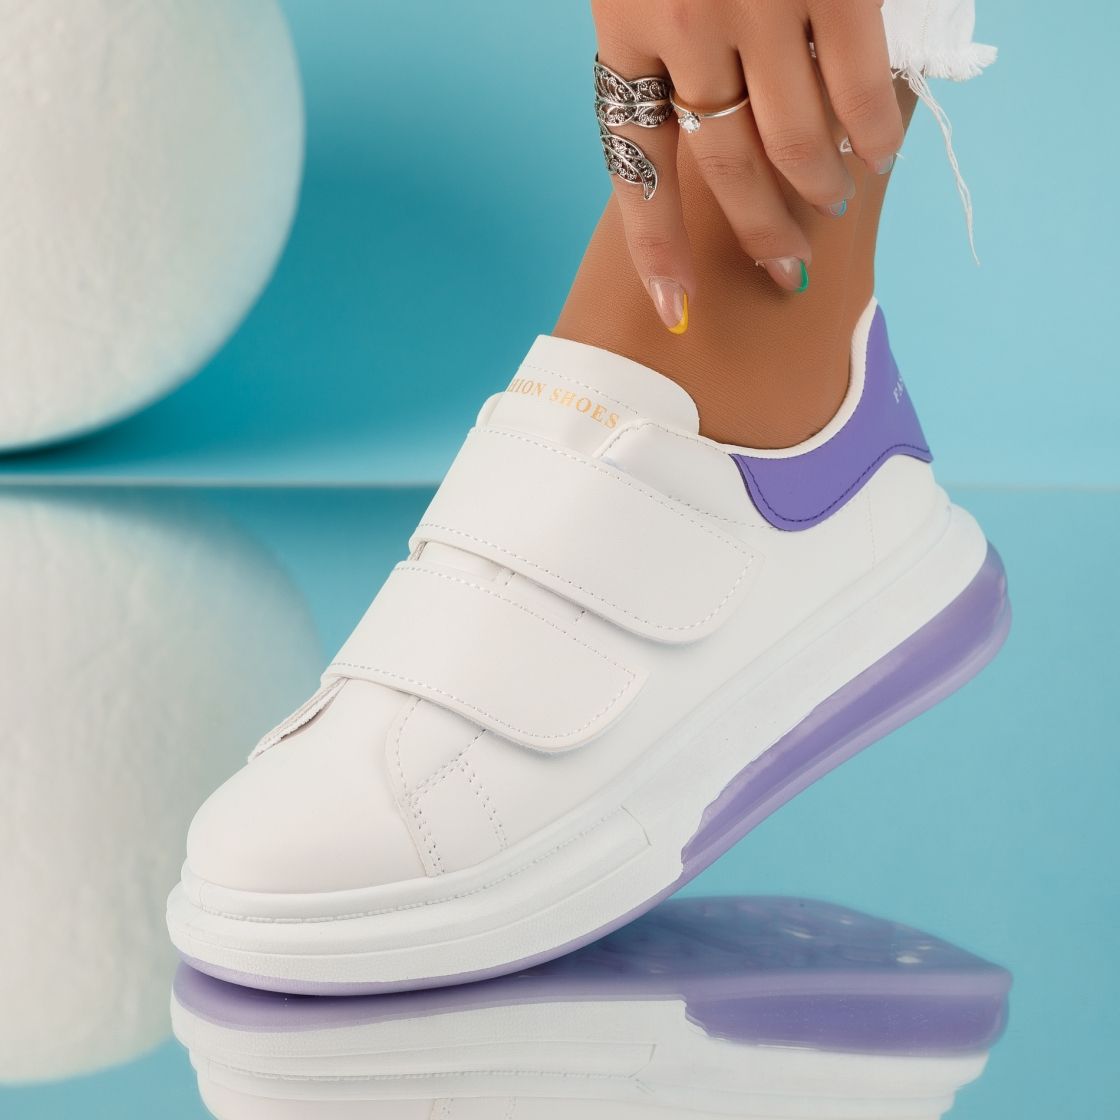 Дамски спортни обувки Adalynn бял/Mov #4963M